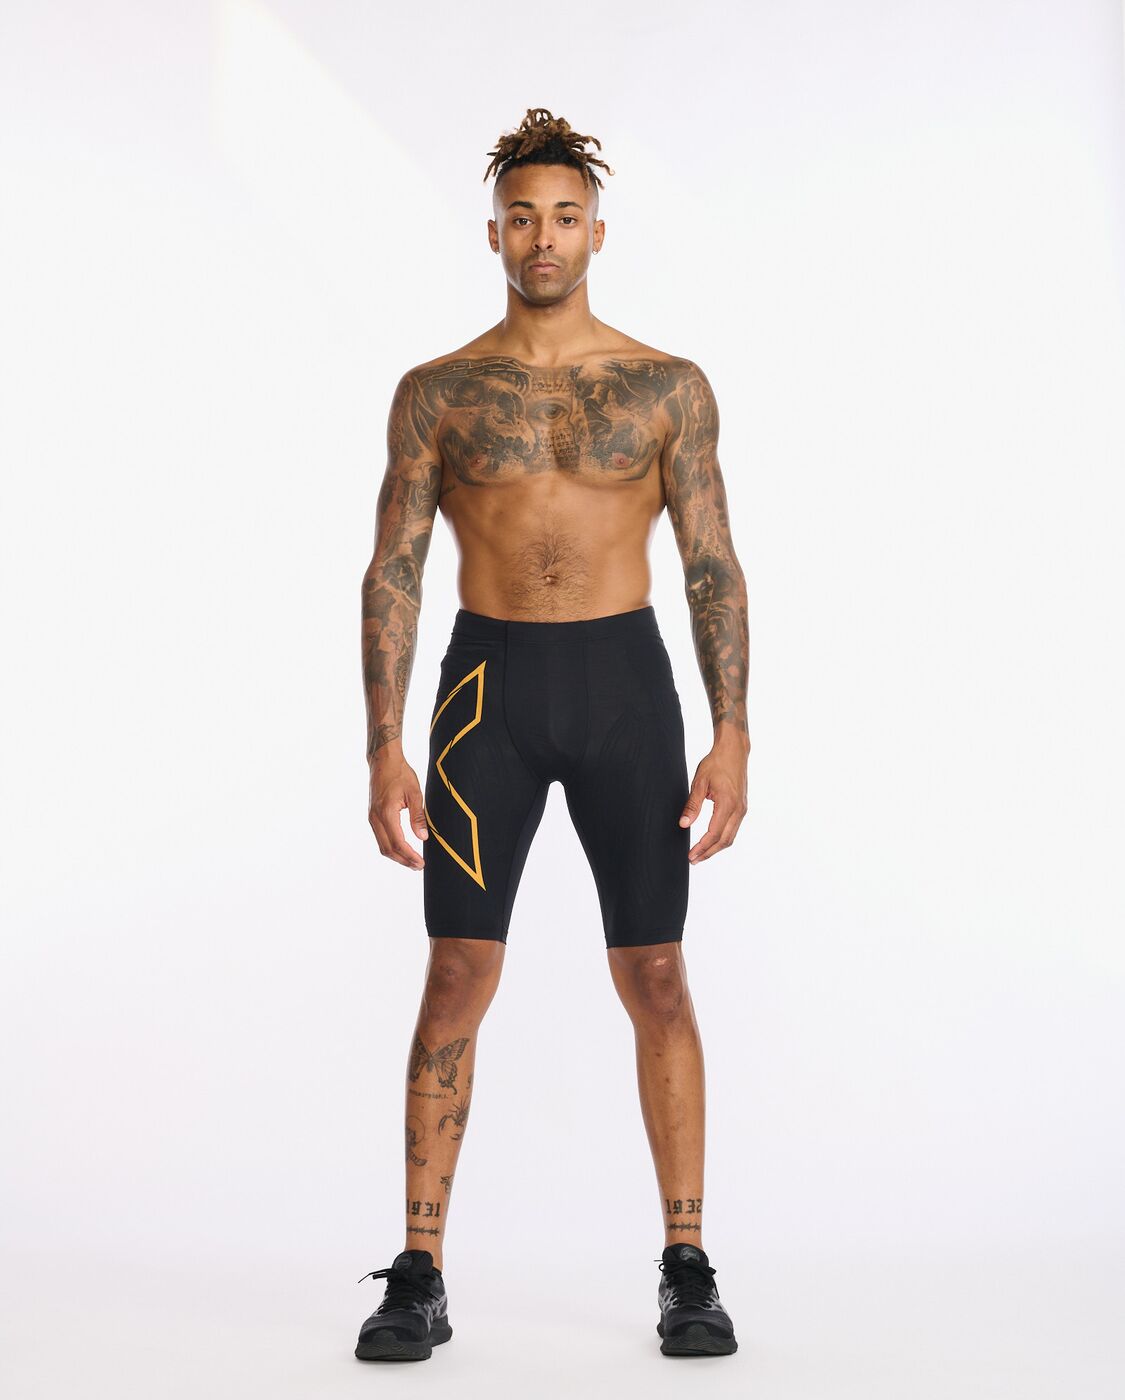 2XU South Africa - Men's Light Speed Compression Shorts - Black/Turmeric Reflective